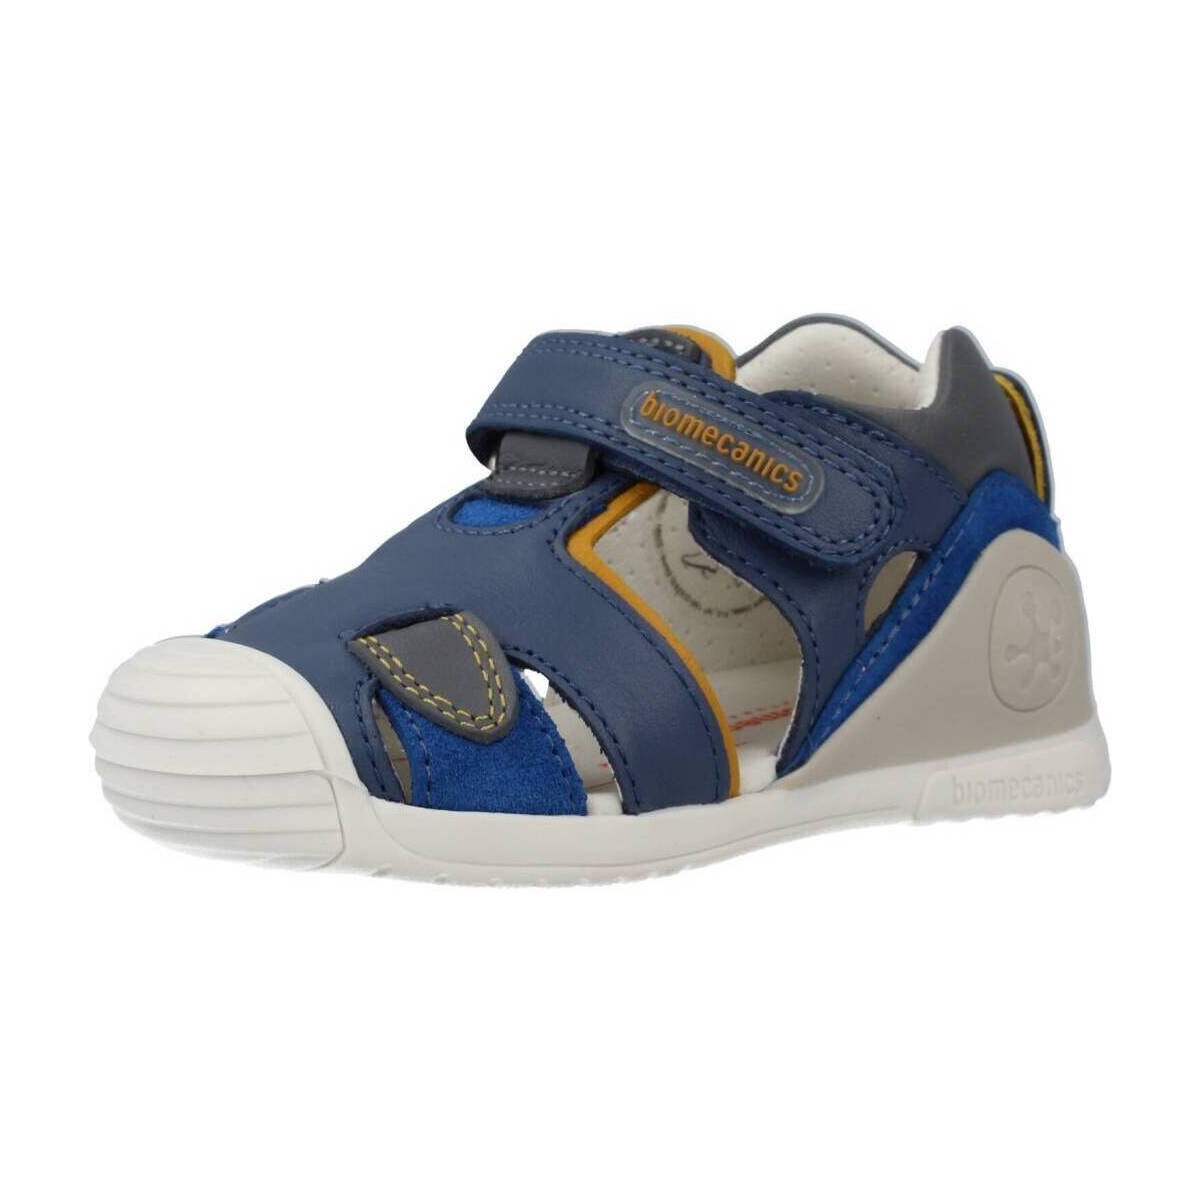 Schuhe Jungen Sandalen / Sandaletten Biomecanics 232147B Blau